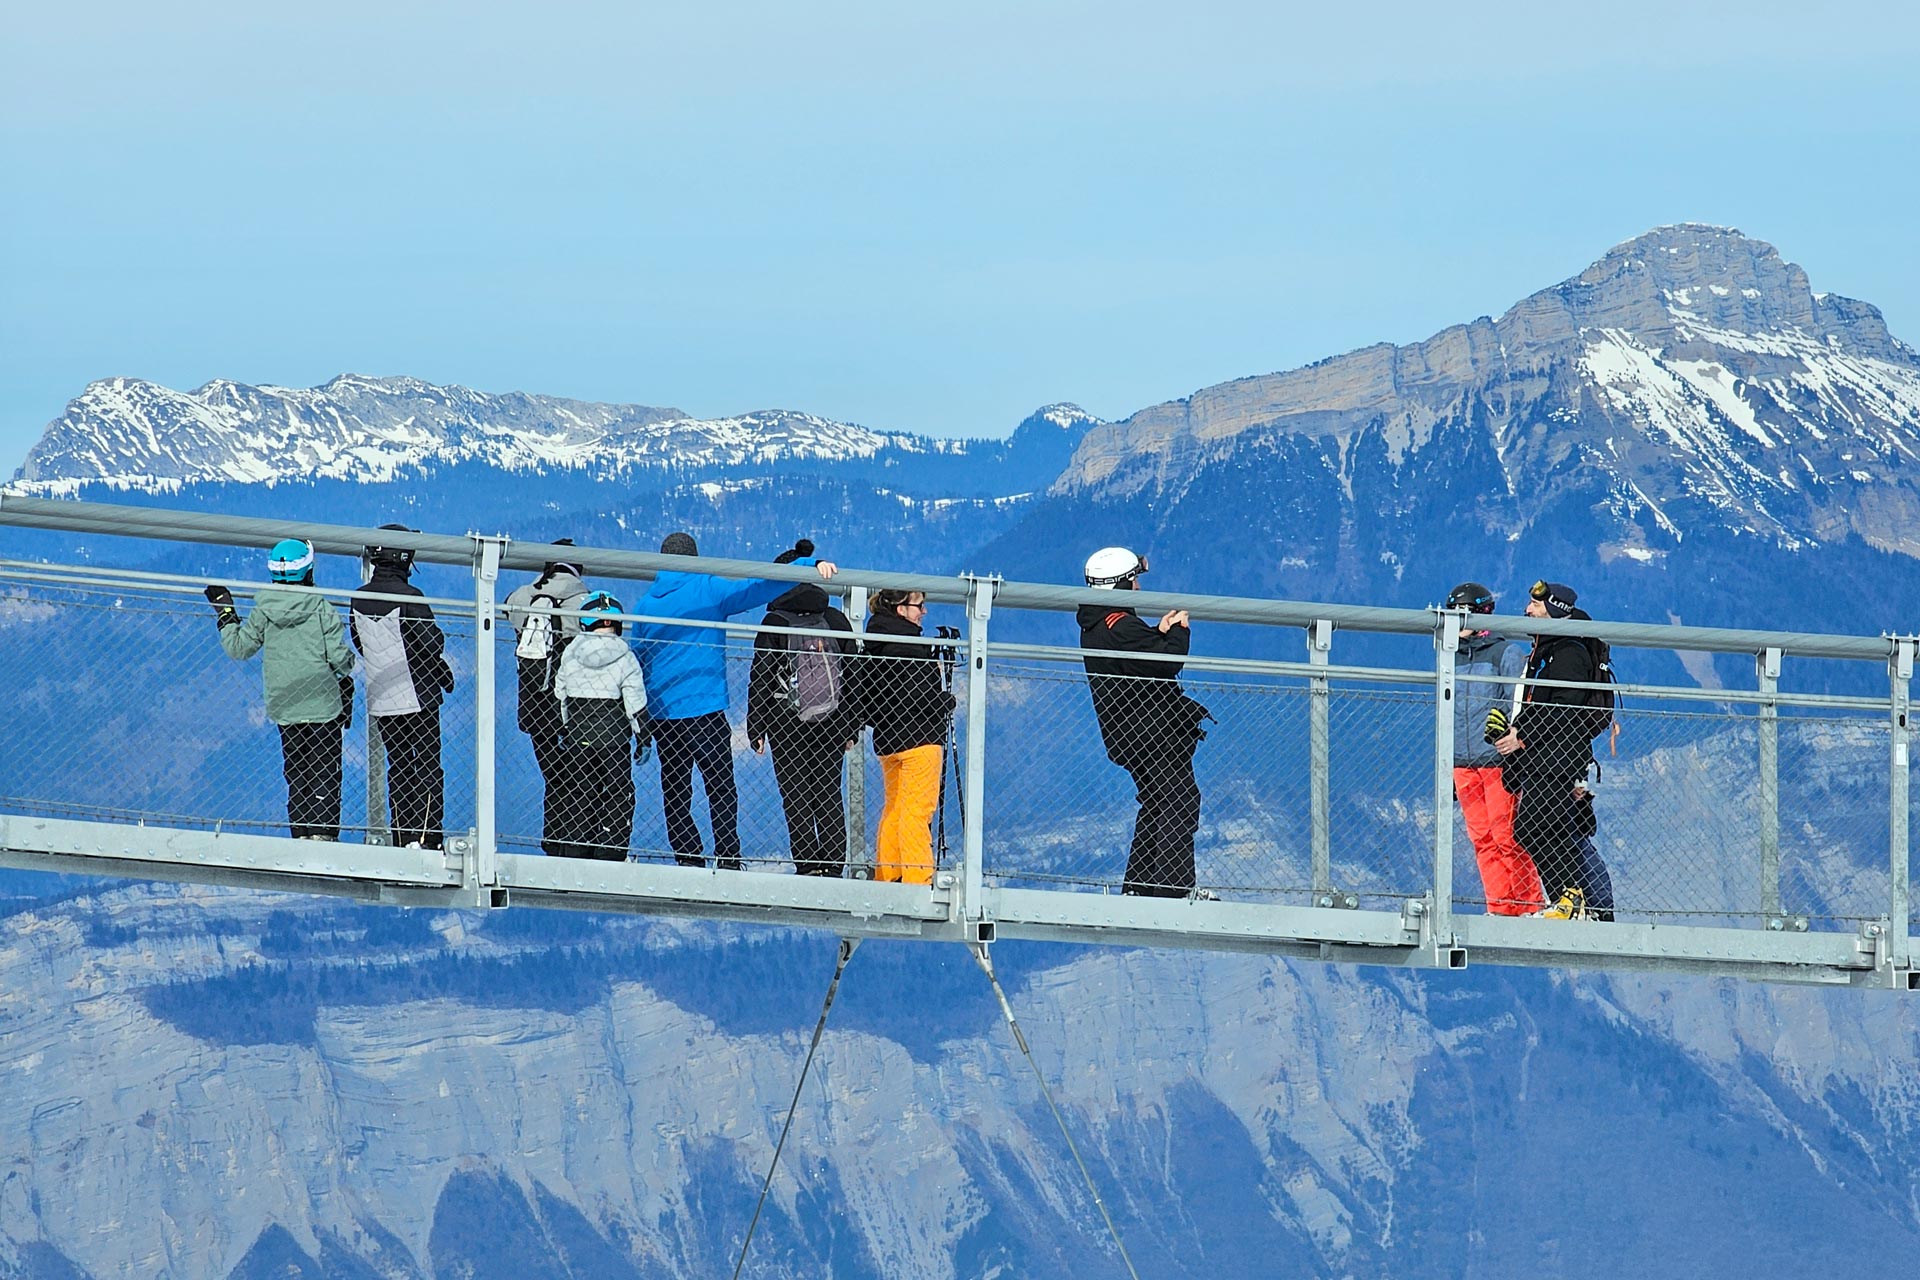 Chamrousse passerelle himalayenne pont suspendu vide panoramic park sommet hiver station ski montagne grenoble isère alpes france - © SD - OT Chamrousse